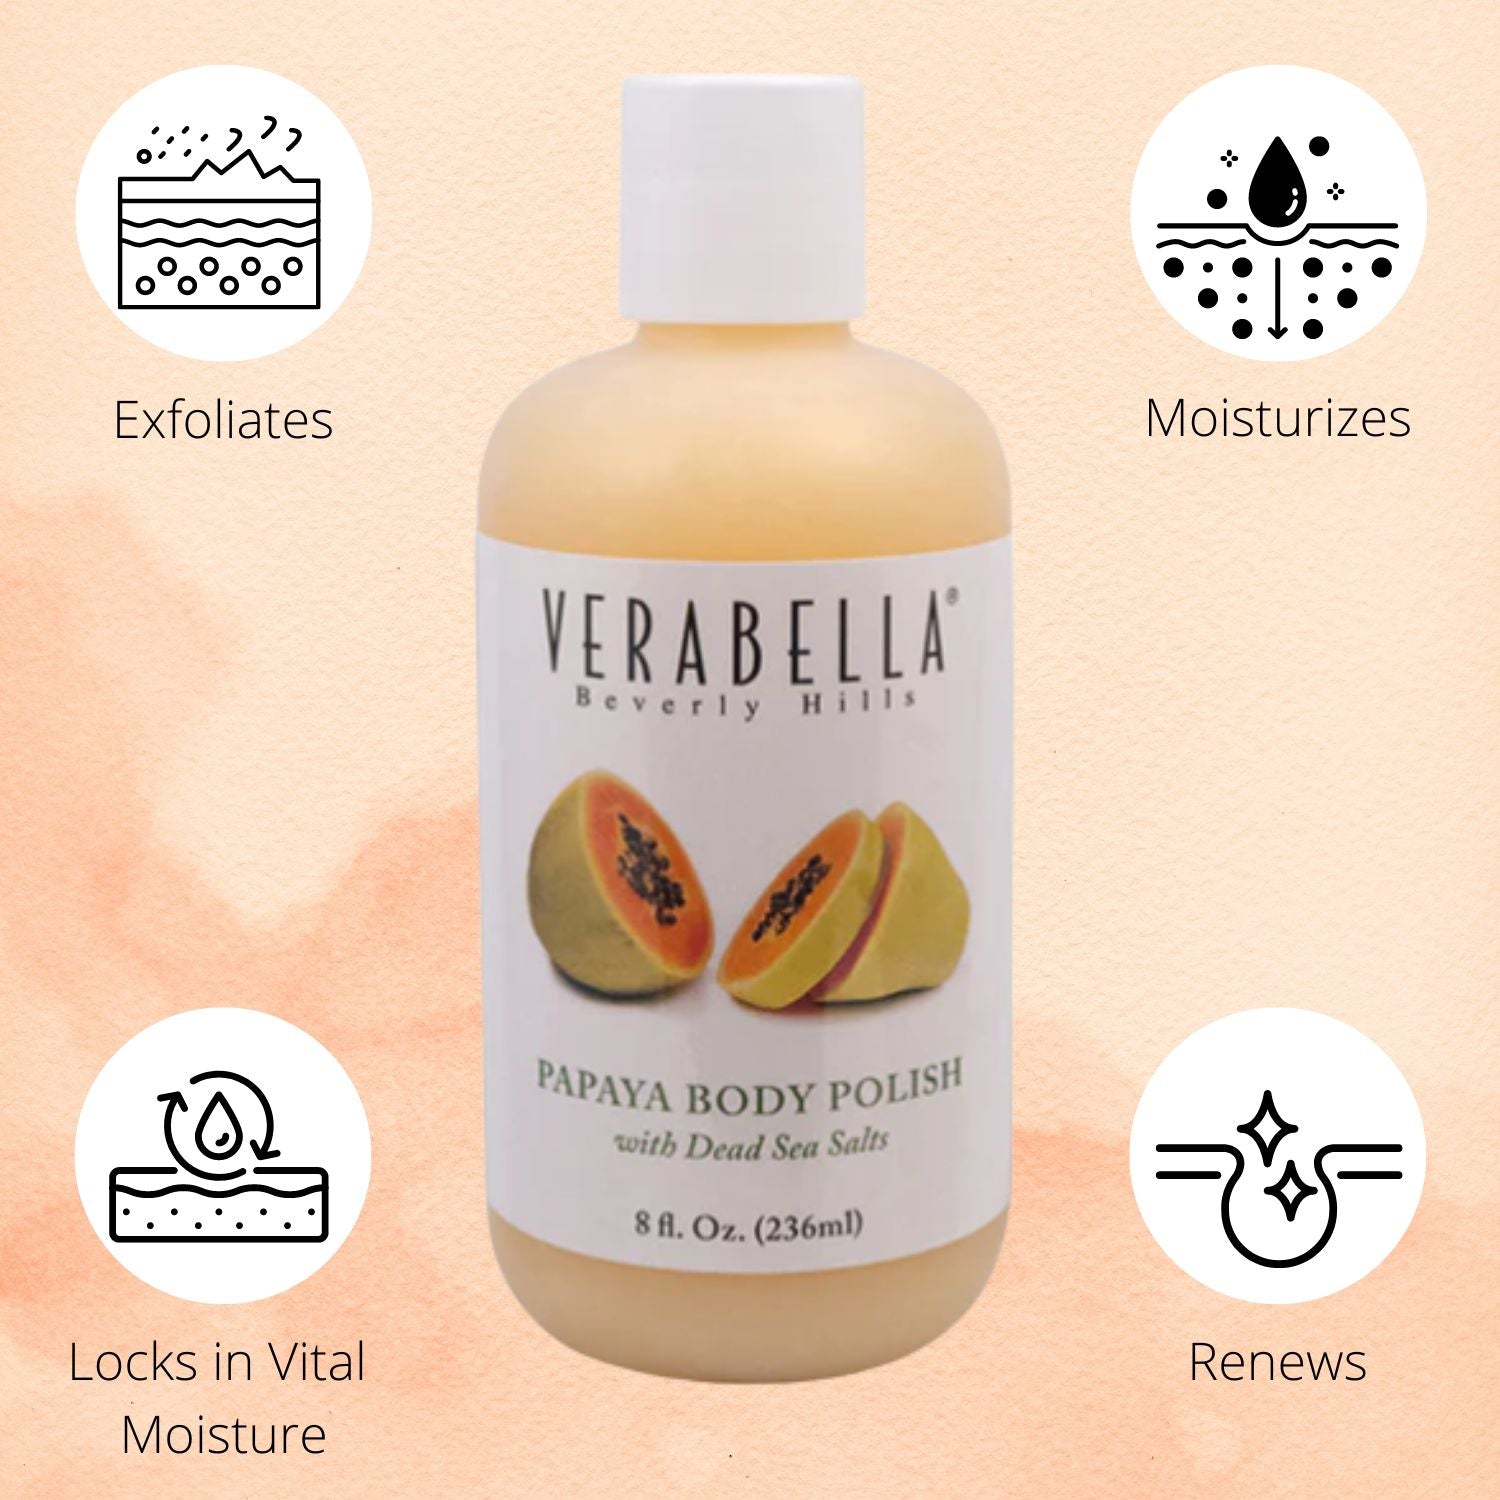 Papaya Body Polish by Verabella exfoliates and moisturizes